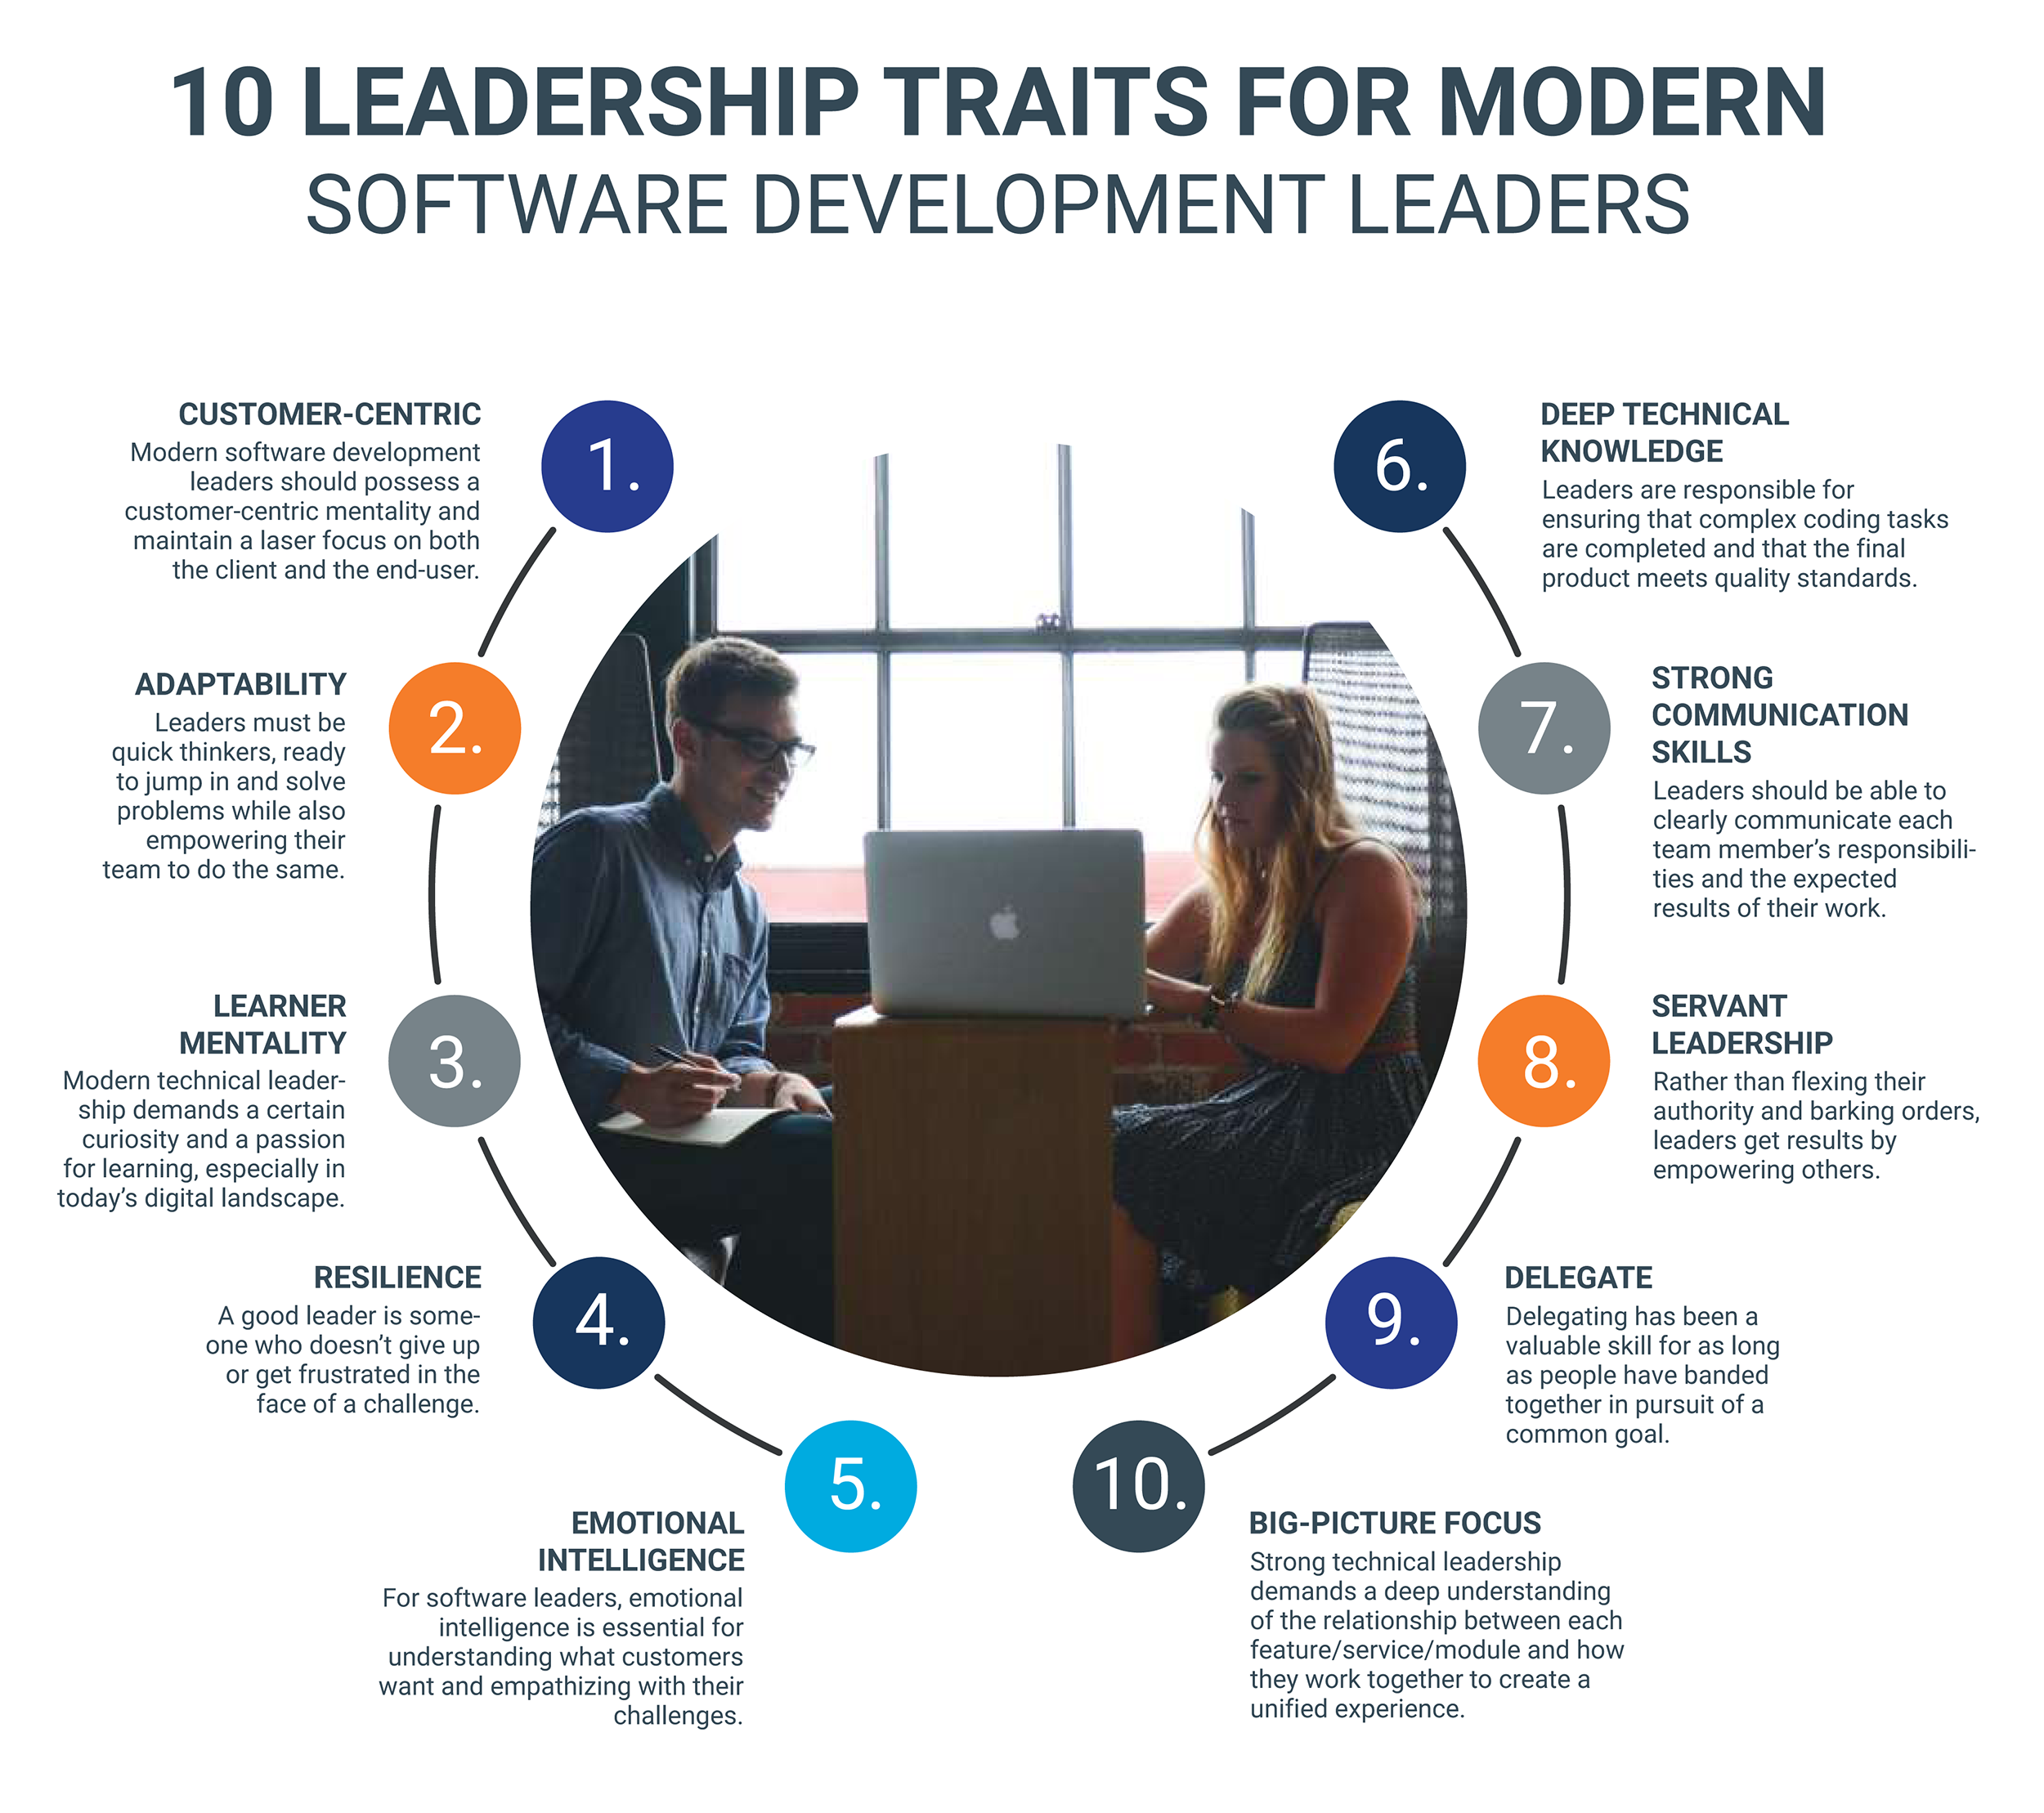 10 Leadership Traits for Software Development Leaders